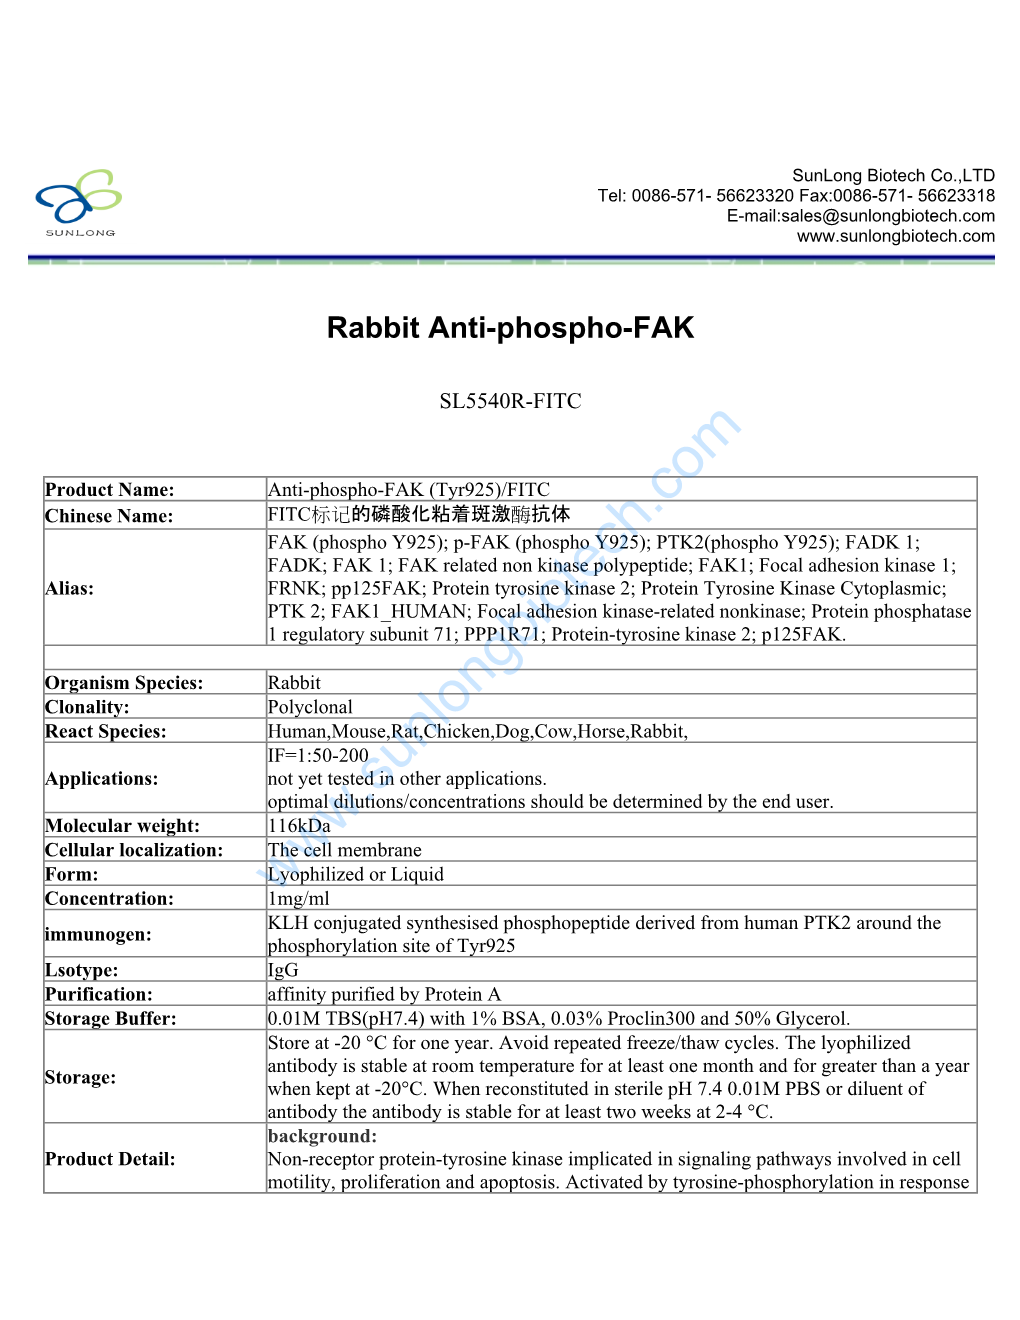 Rabbit Anti-Phospho-FAK-SL5540R-FITC